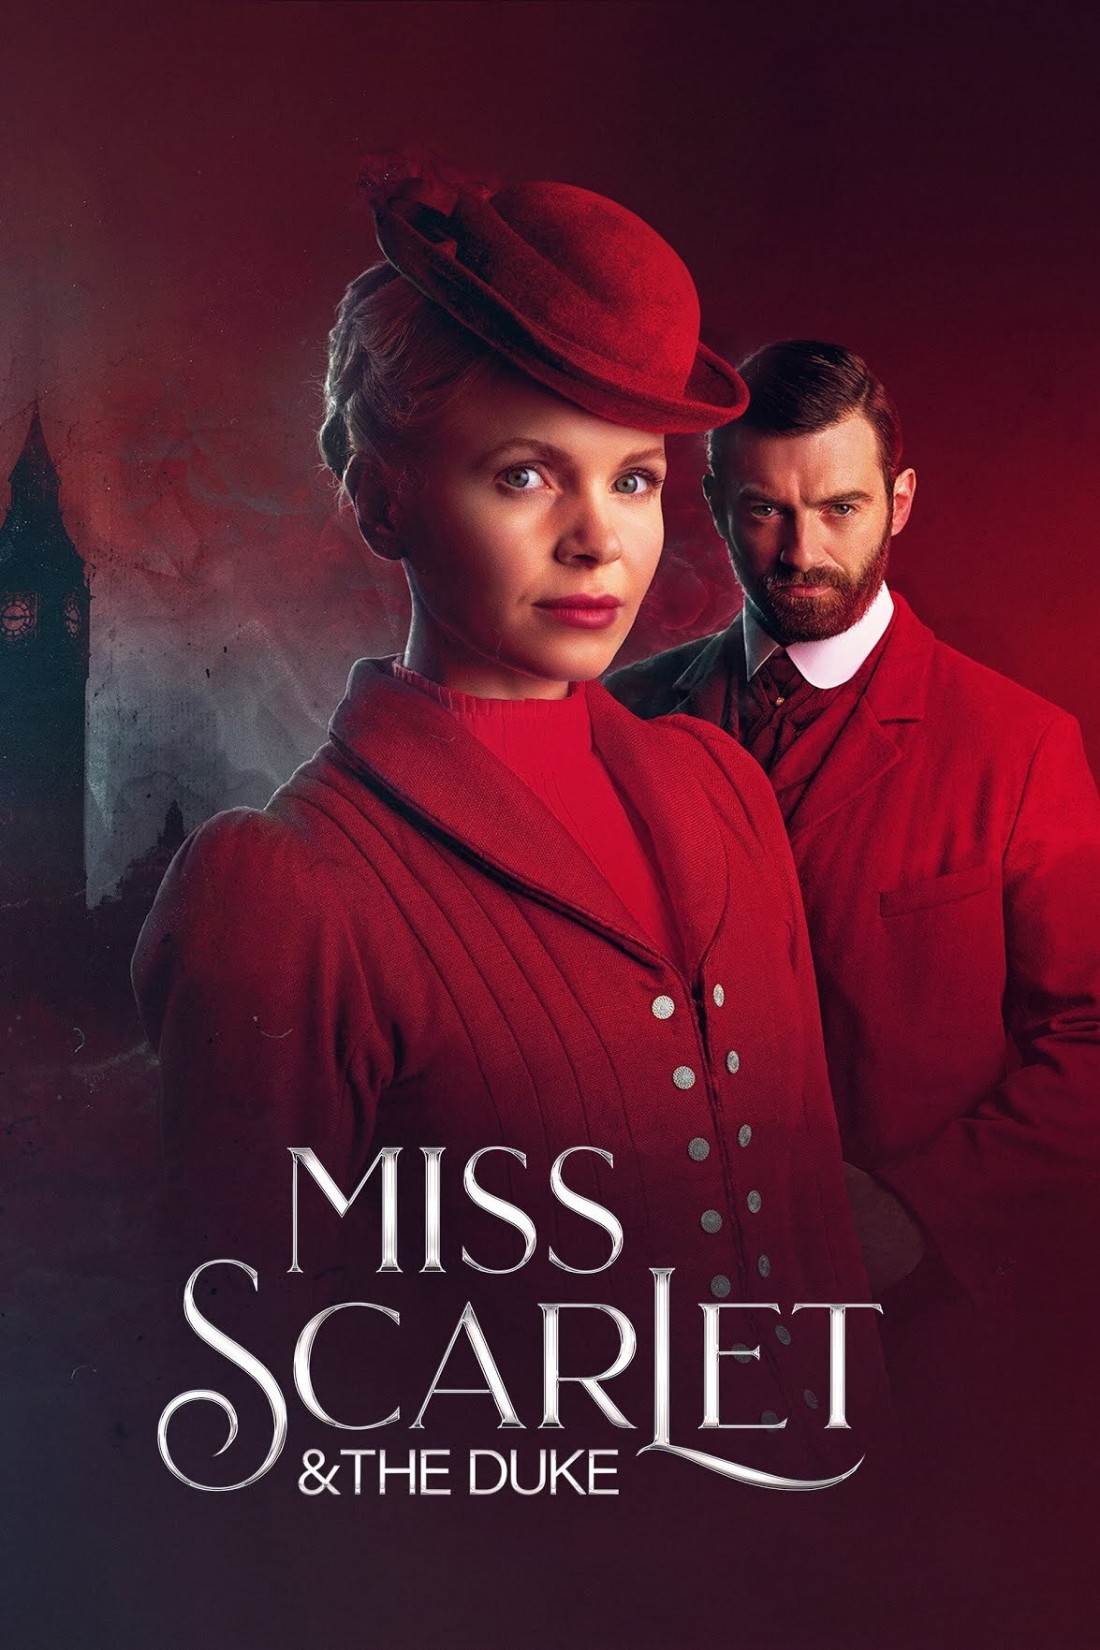 Miss Scarlet and the Duke S04E01 Elysium [1080p] WEB-DL (x264) 785ab508e8155eadbbcea0ae328d482f